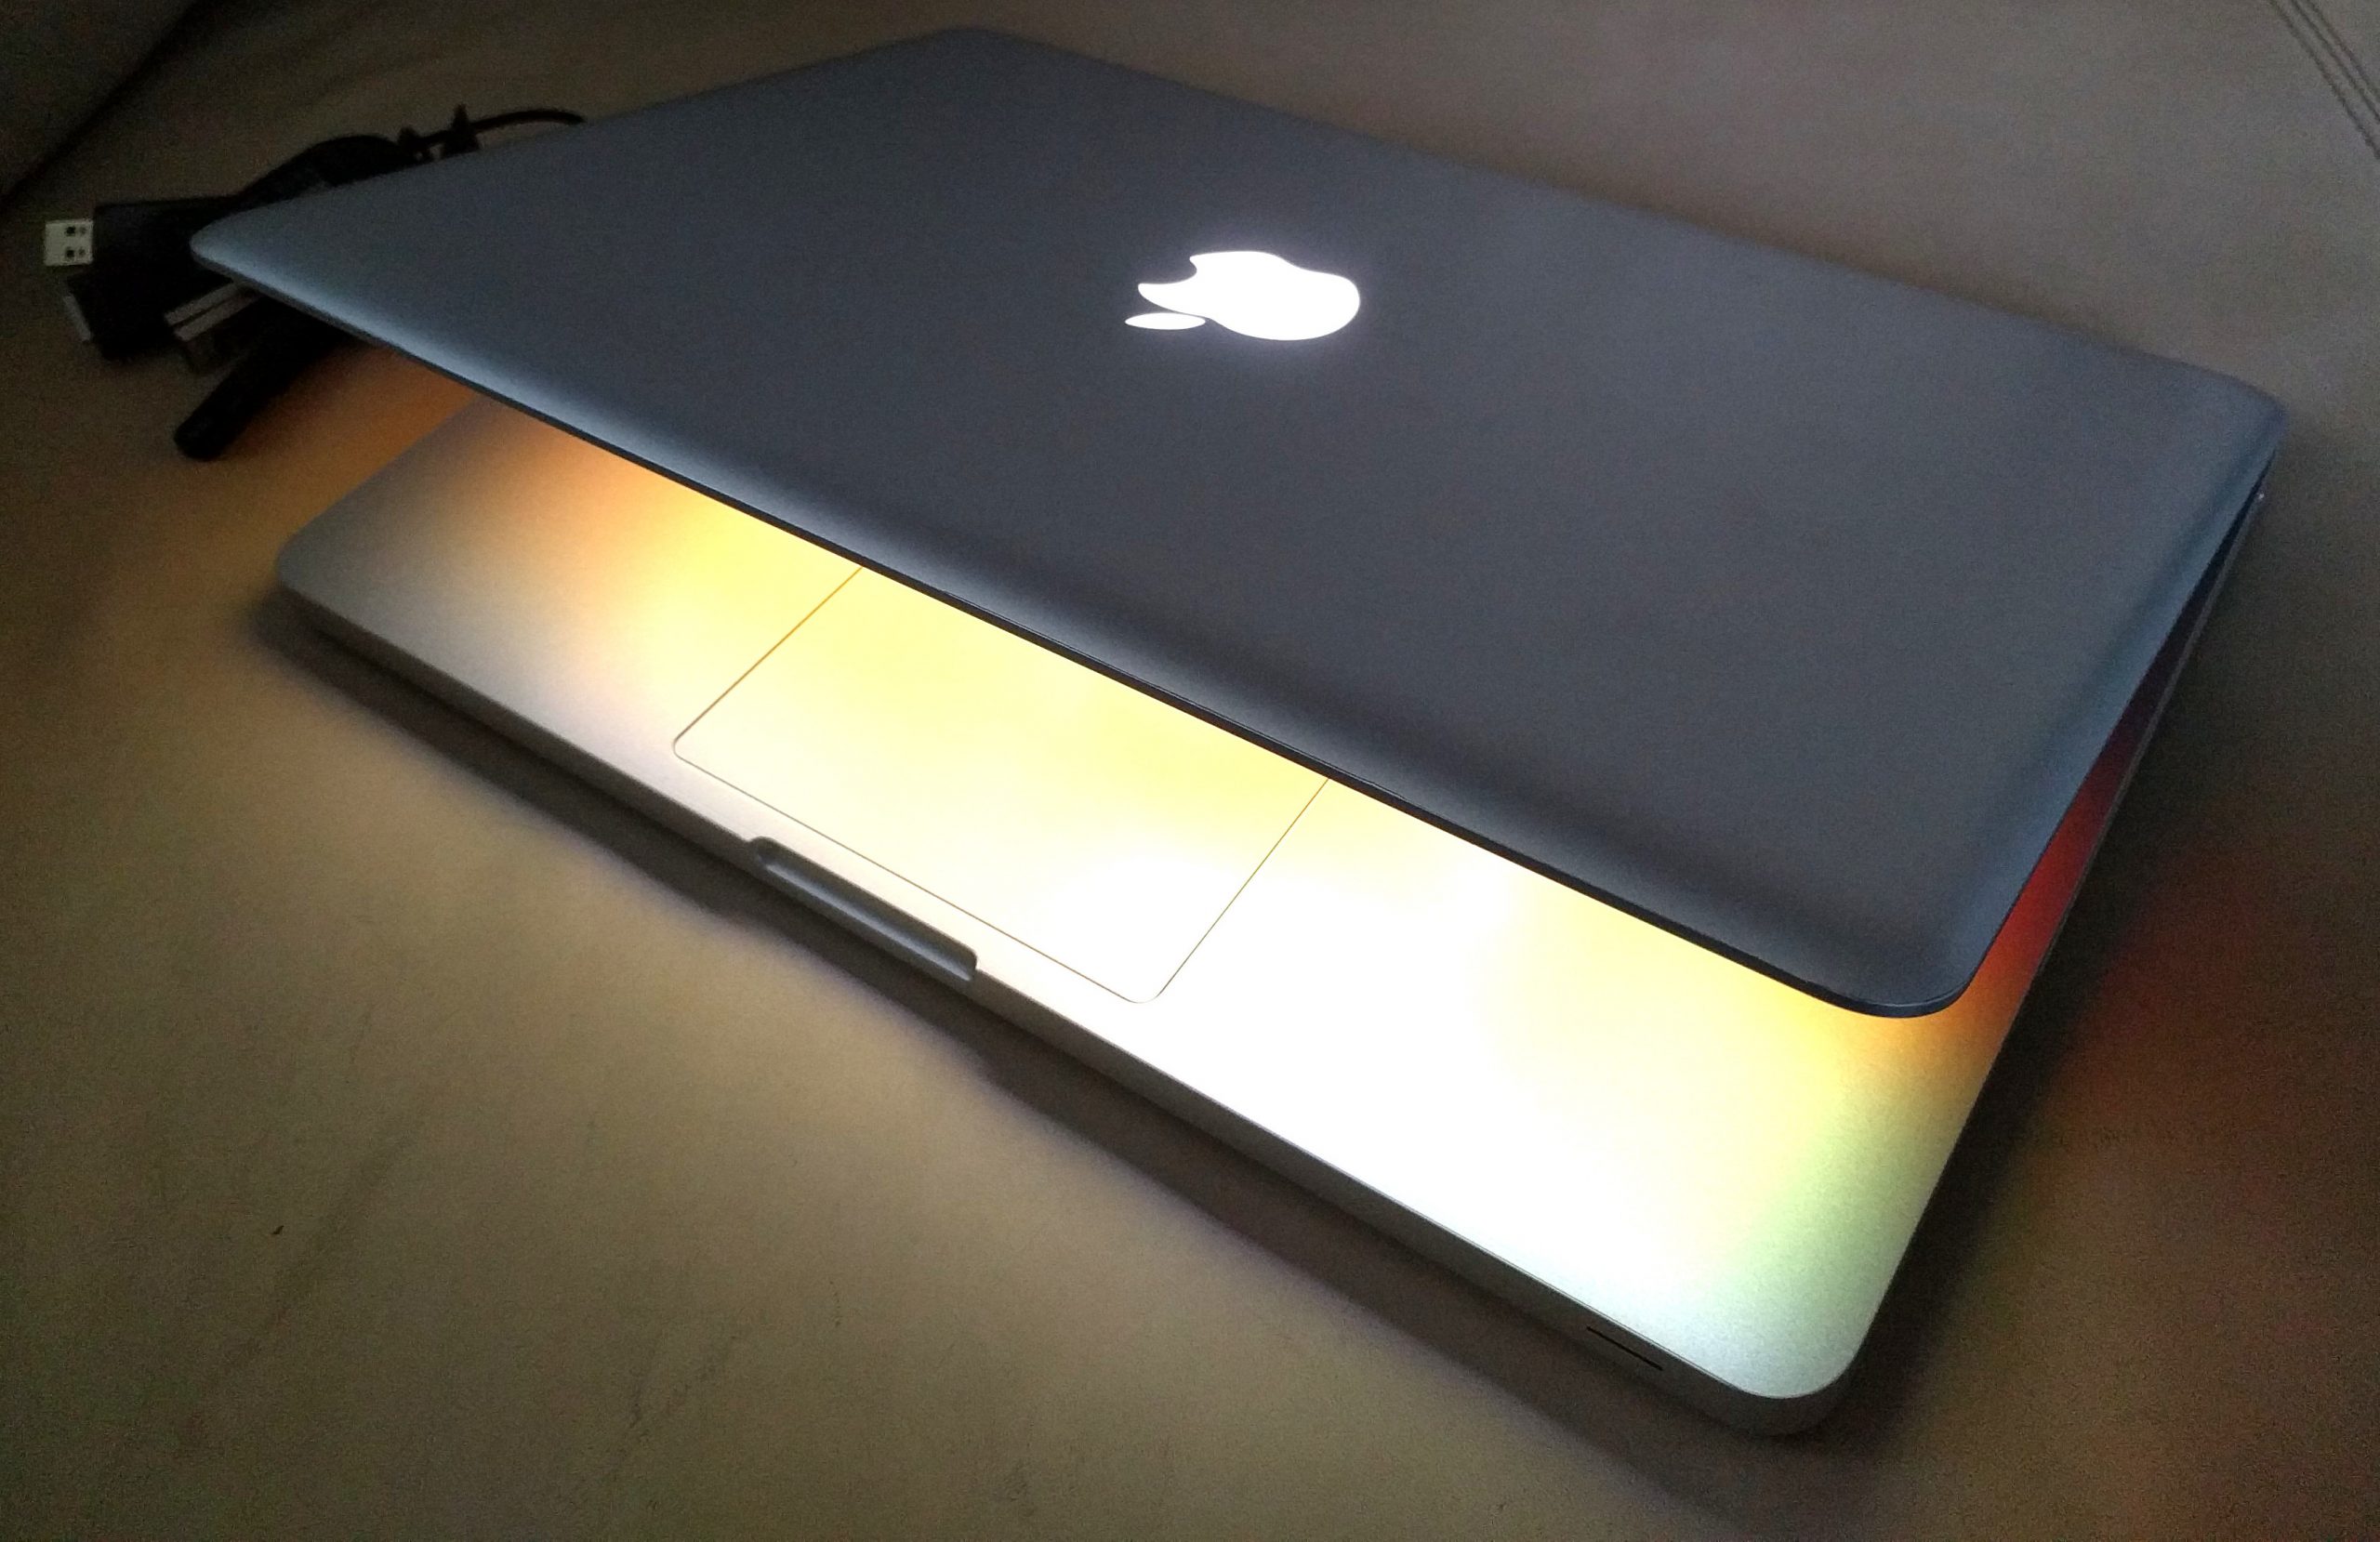 Pure Beauty & Nostalgia: Apple Macbook Pro 9,2 (A1278) Mid 2012 